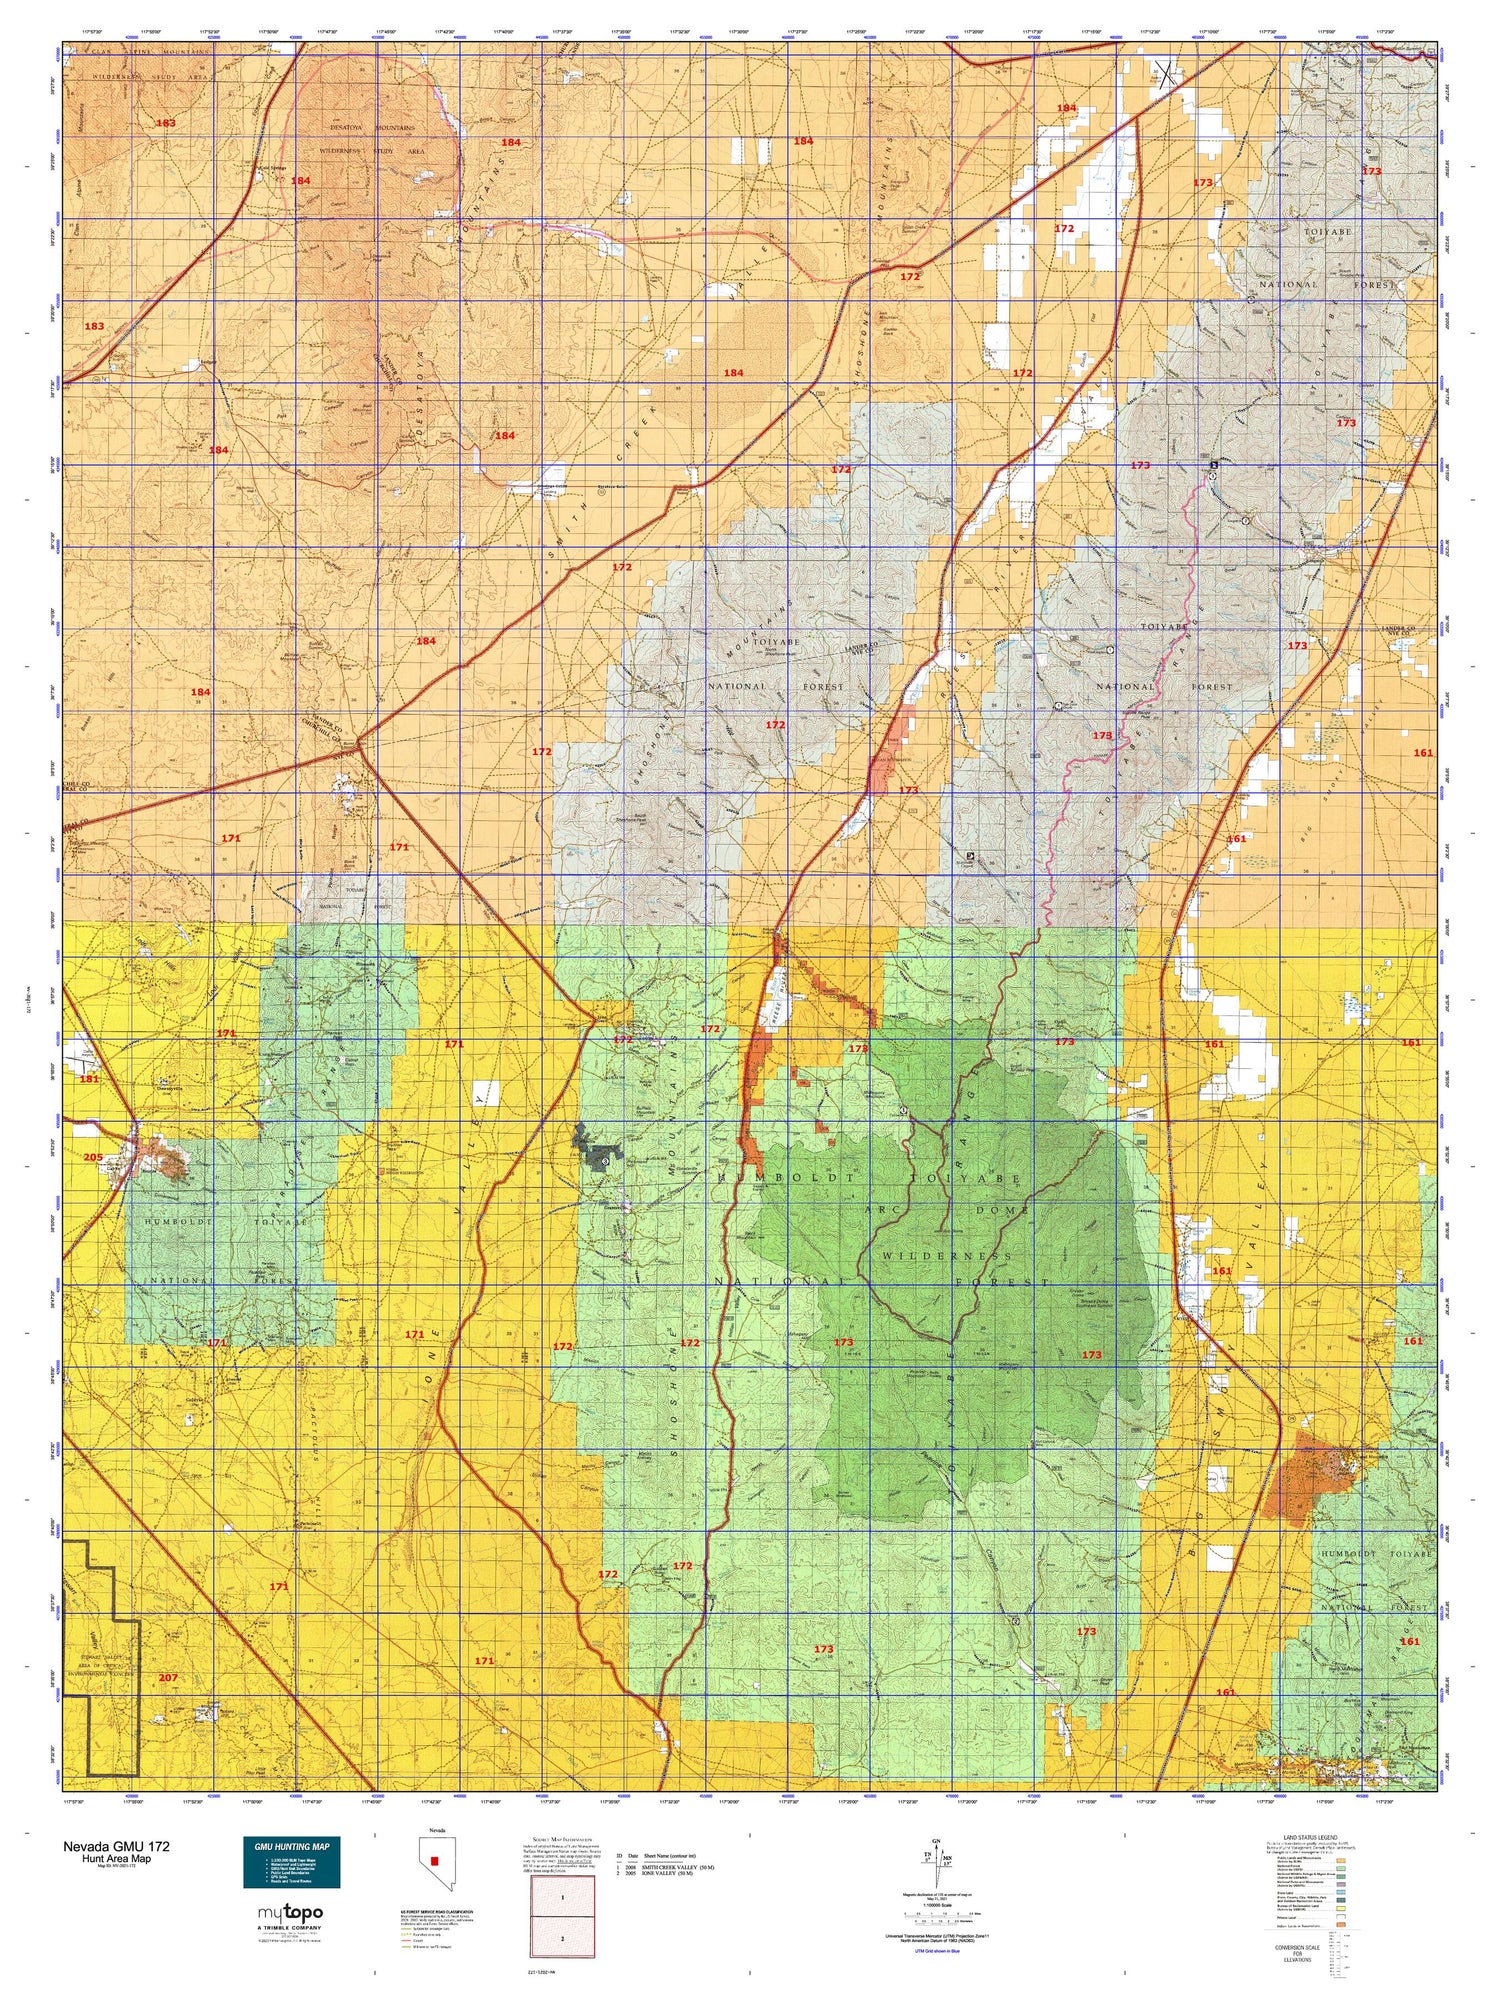 Nevada GMU 172 Map Image